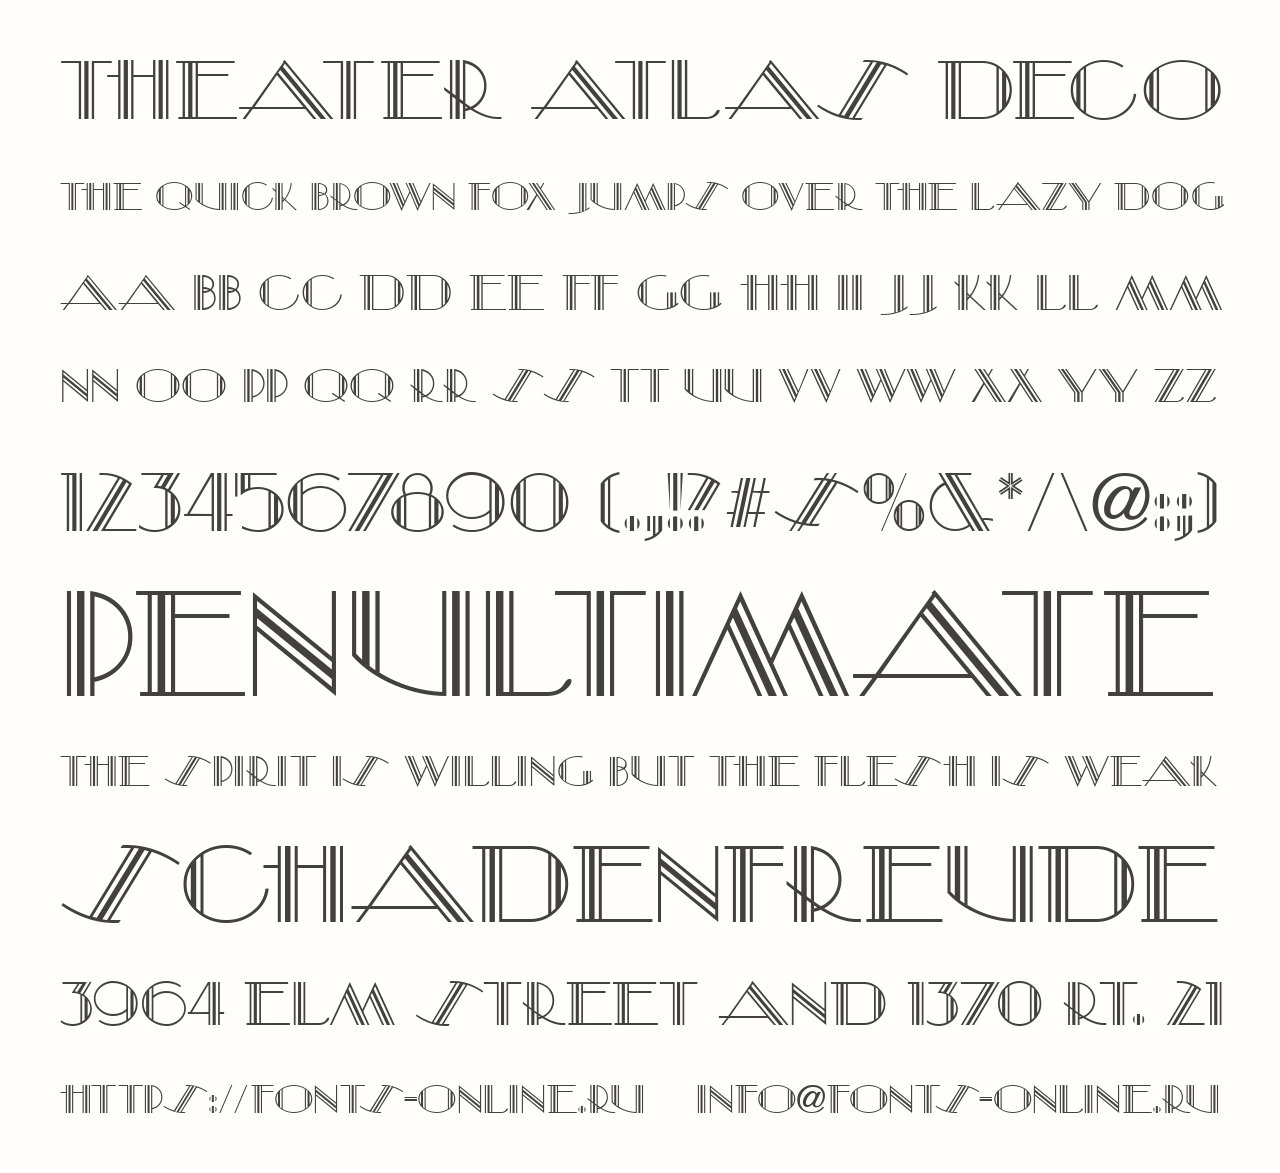 Font Theater Atlas Deco